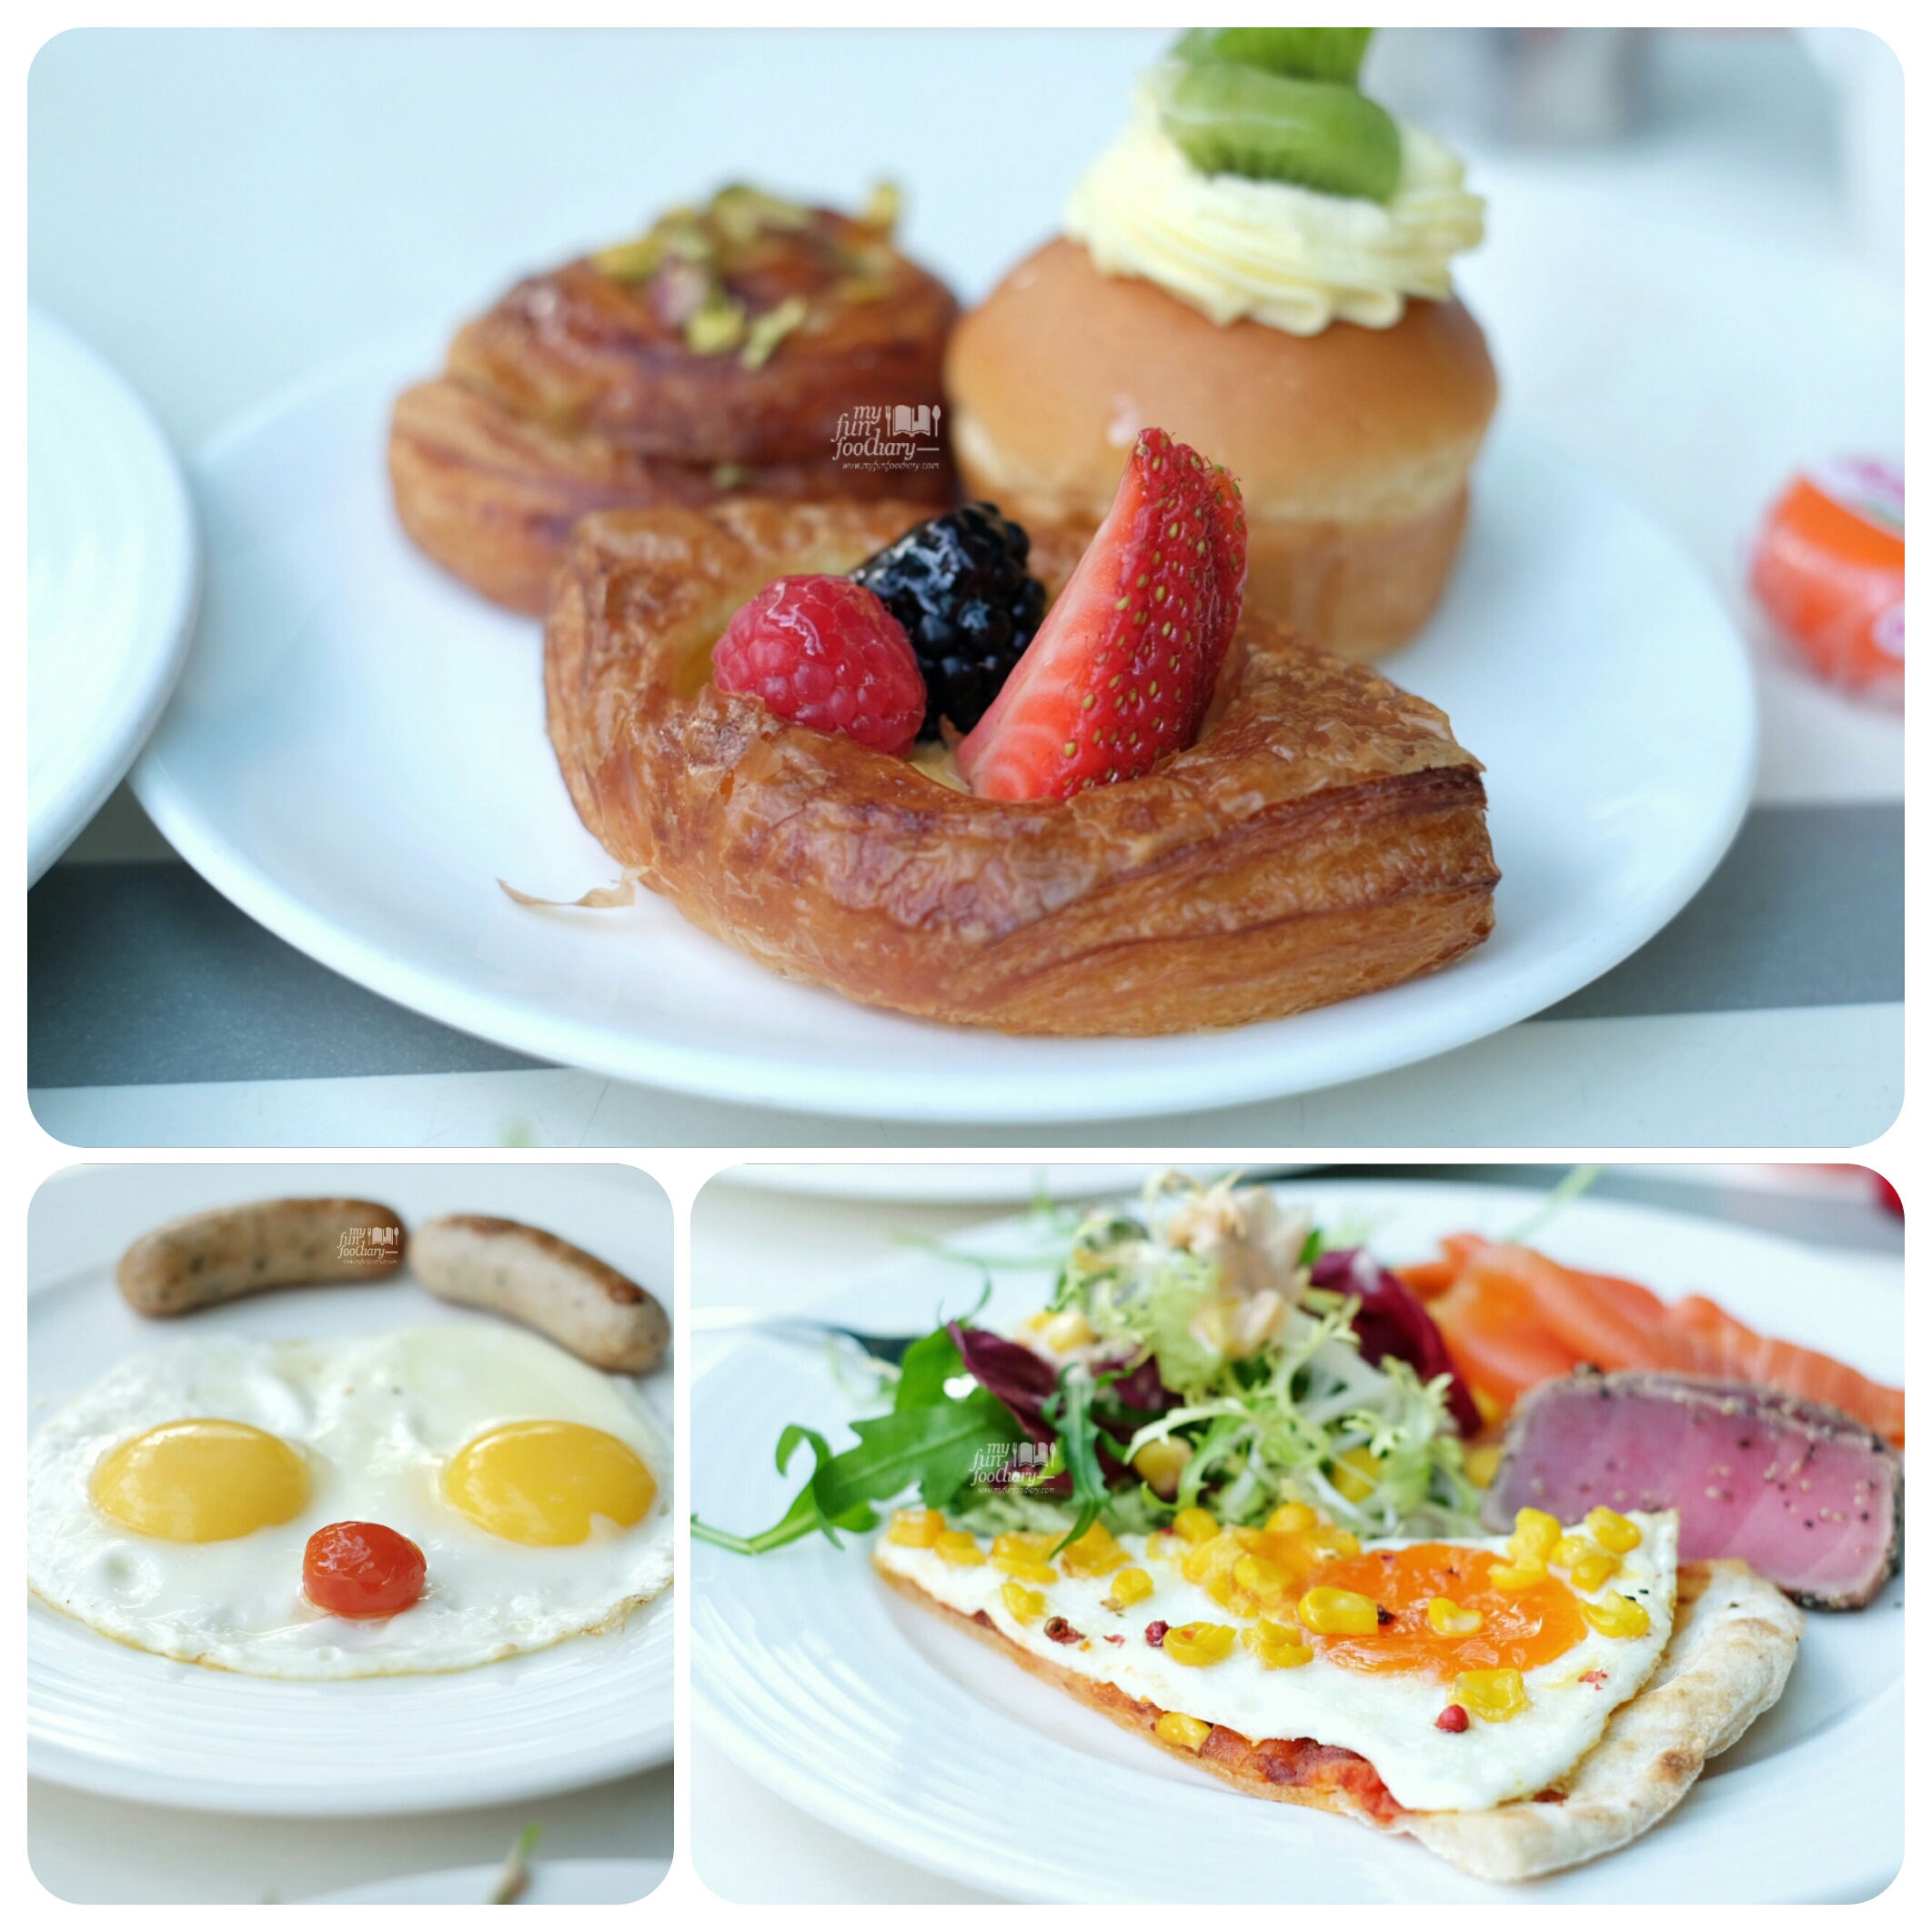 Buffet Breakfast at The Line Shangri-La Singapore day 1 by Myfunfoodiary 02